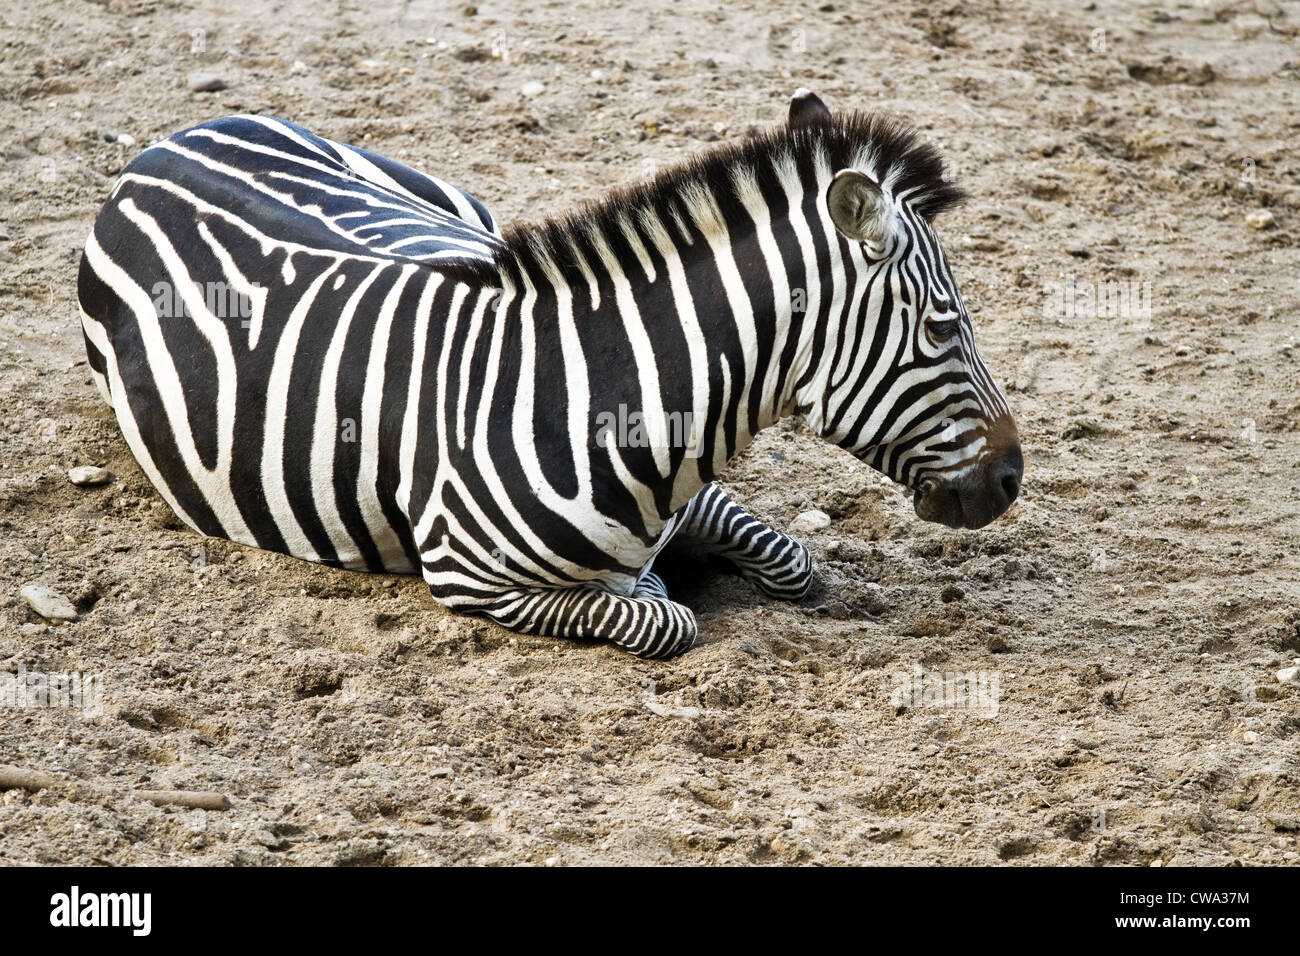 Zebra or Equus quagga resting on sand Stock Photo